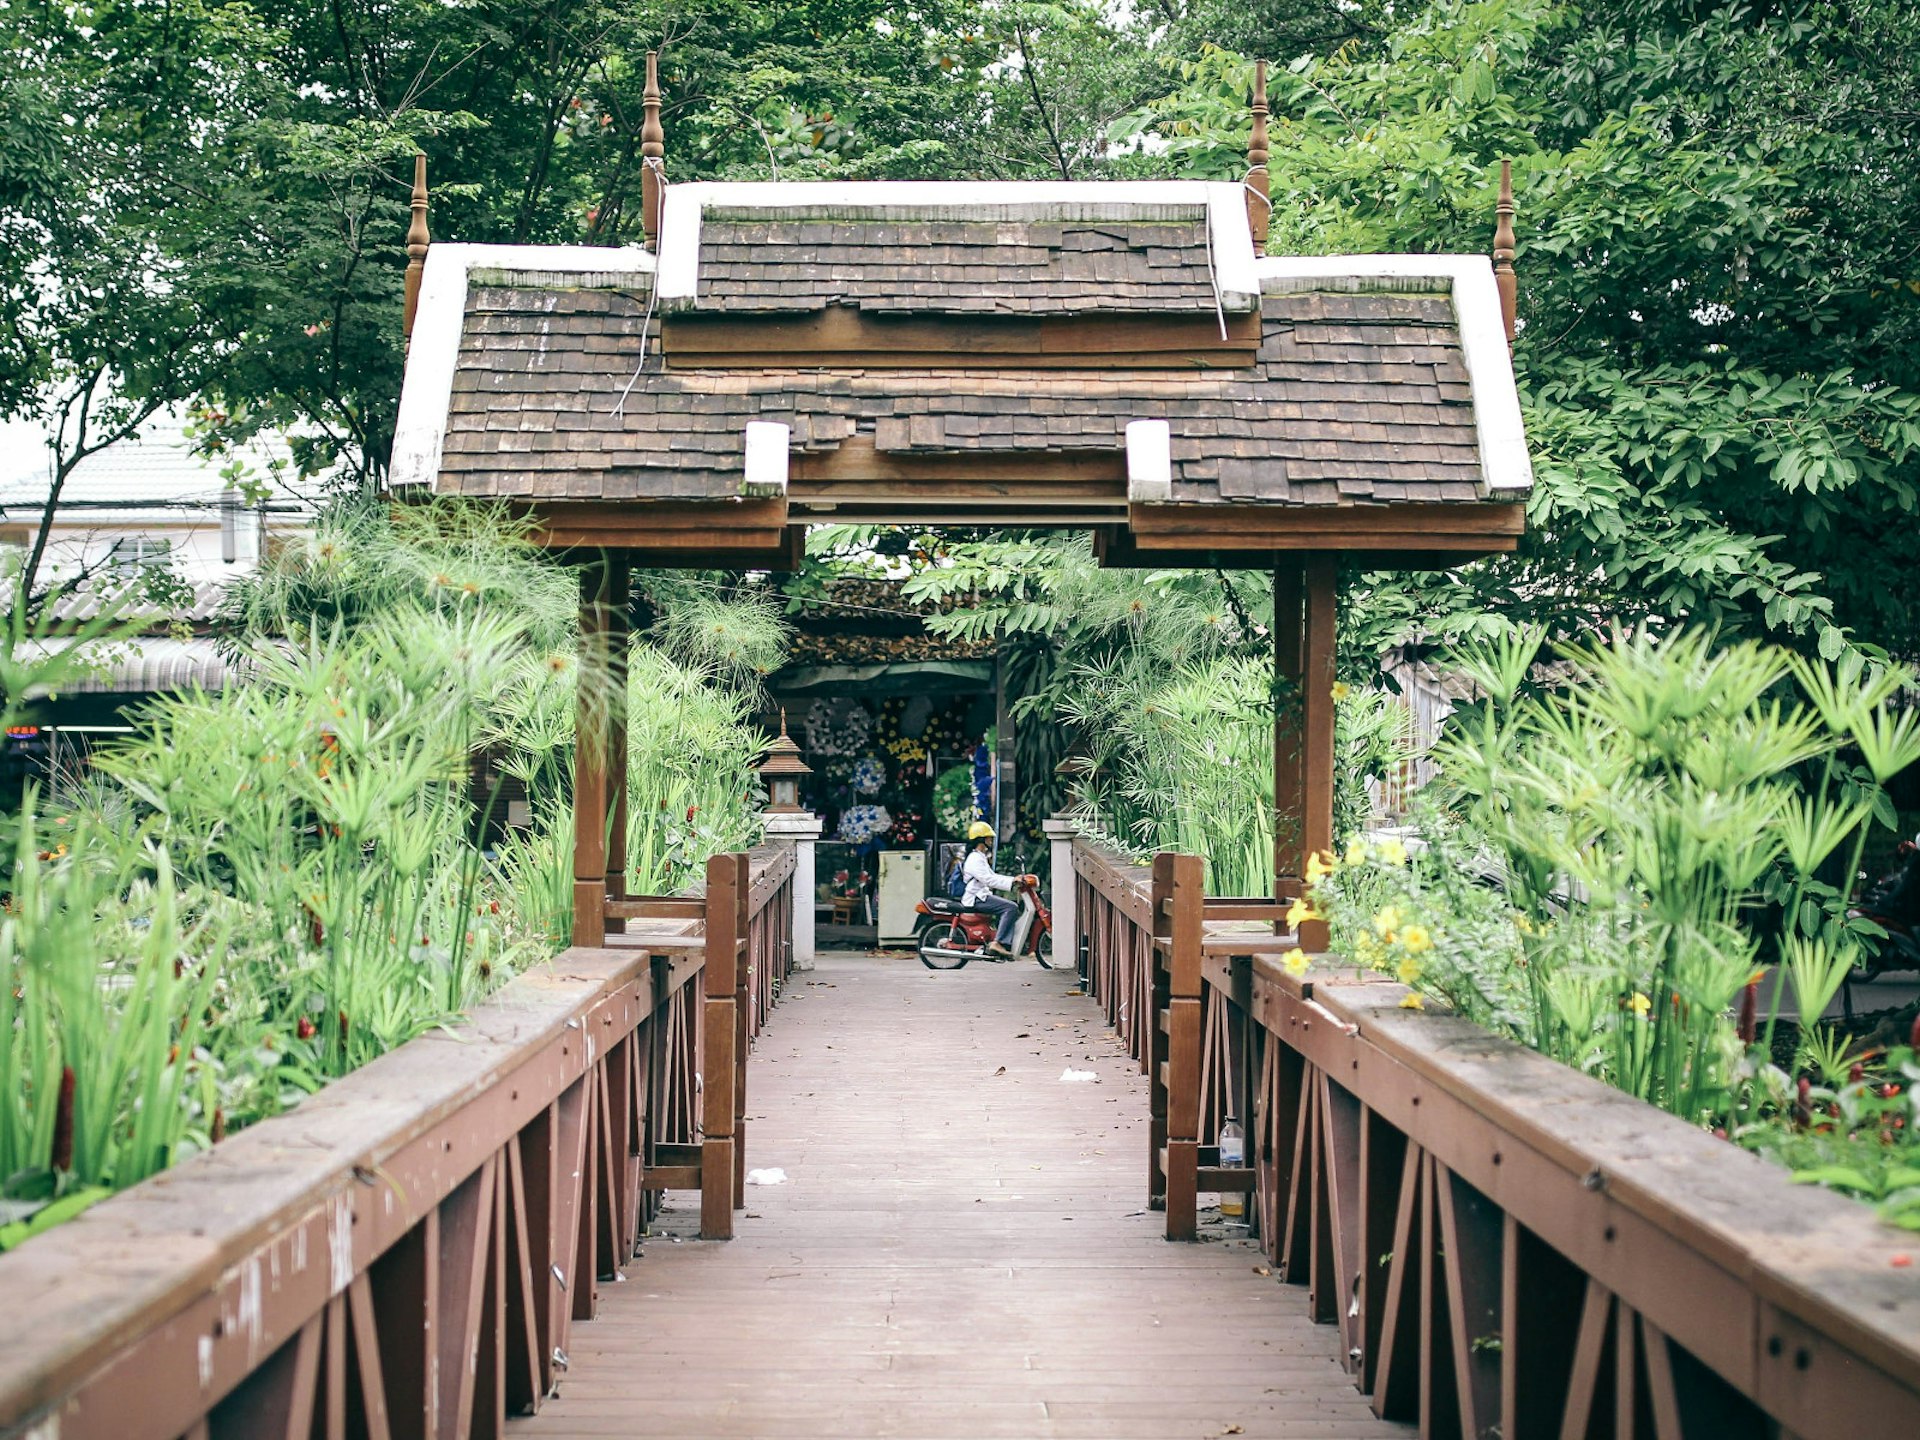 One of ancient Chiang Mai's pedestrian bridges